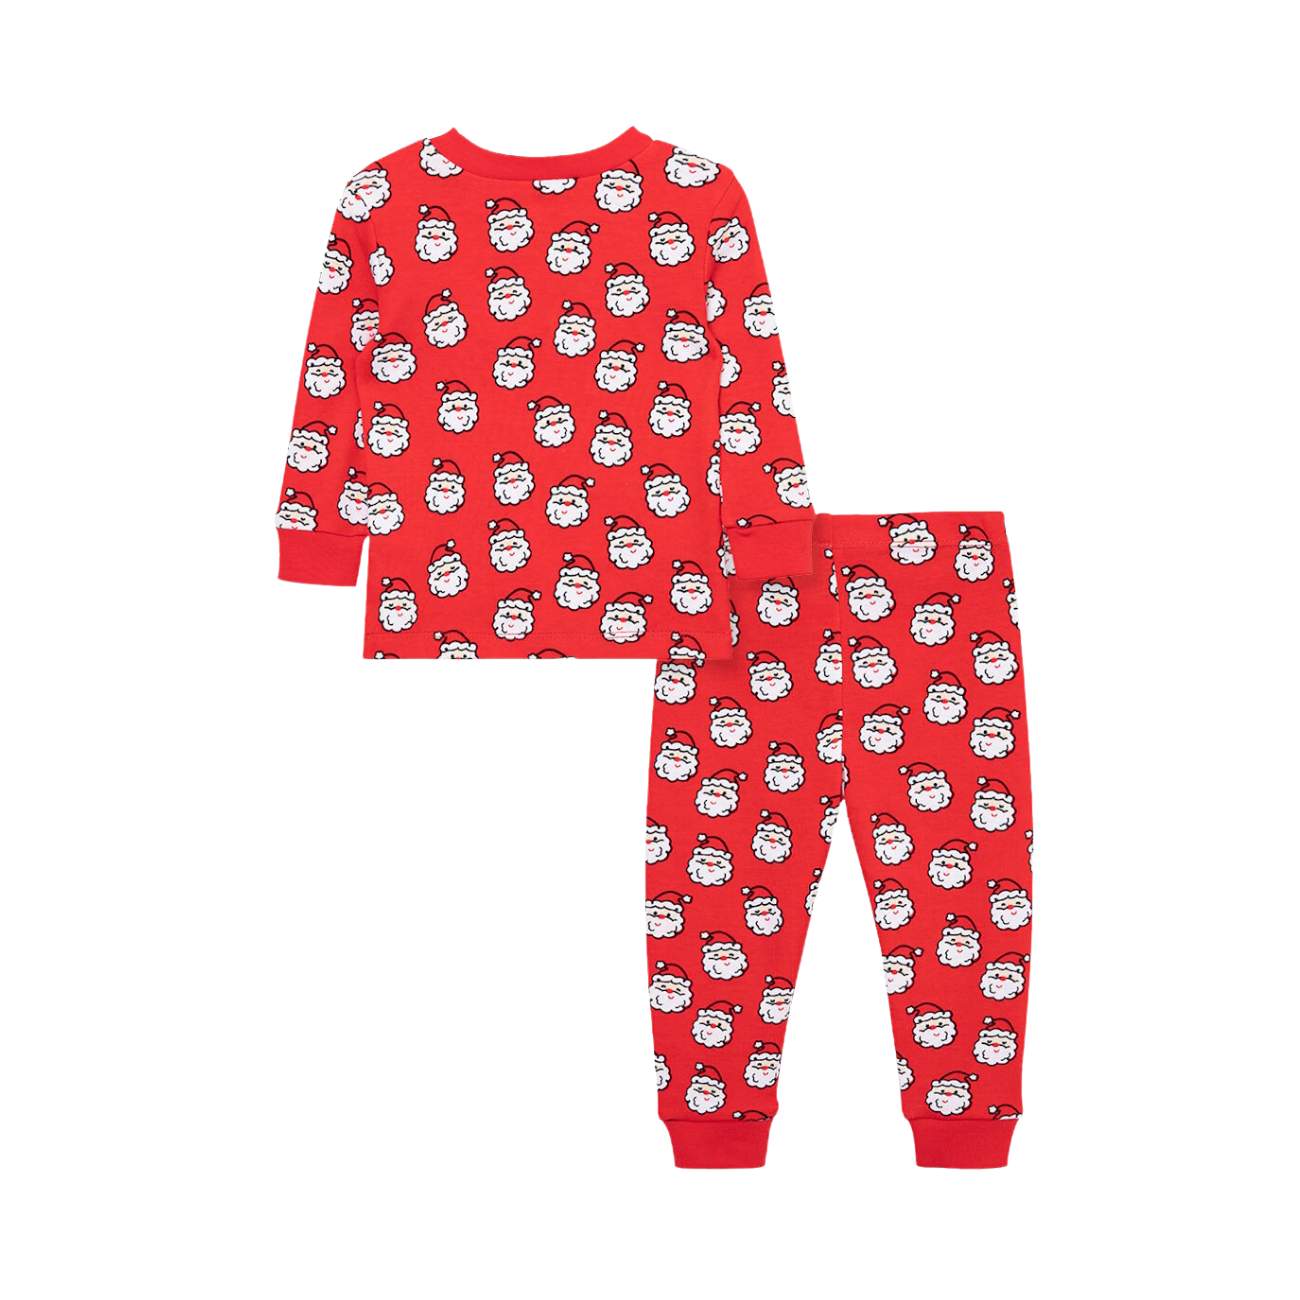 Little Me Pijama 2 piezas pantalón y playera manga larga estampado Santa roja